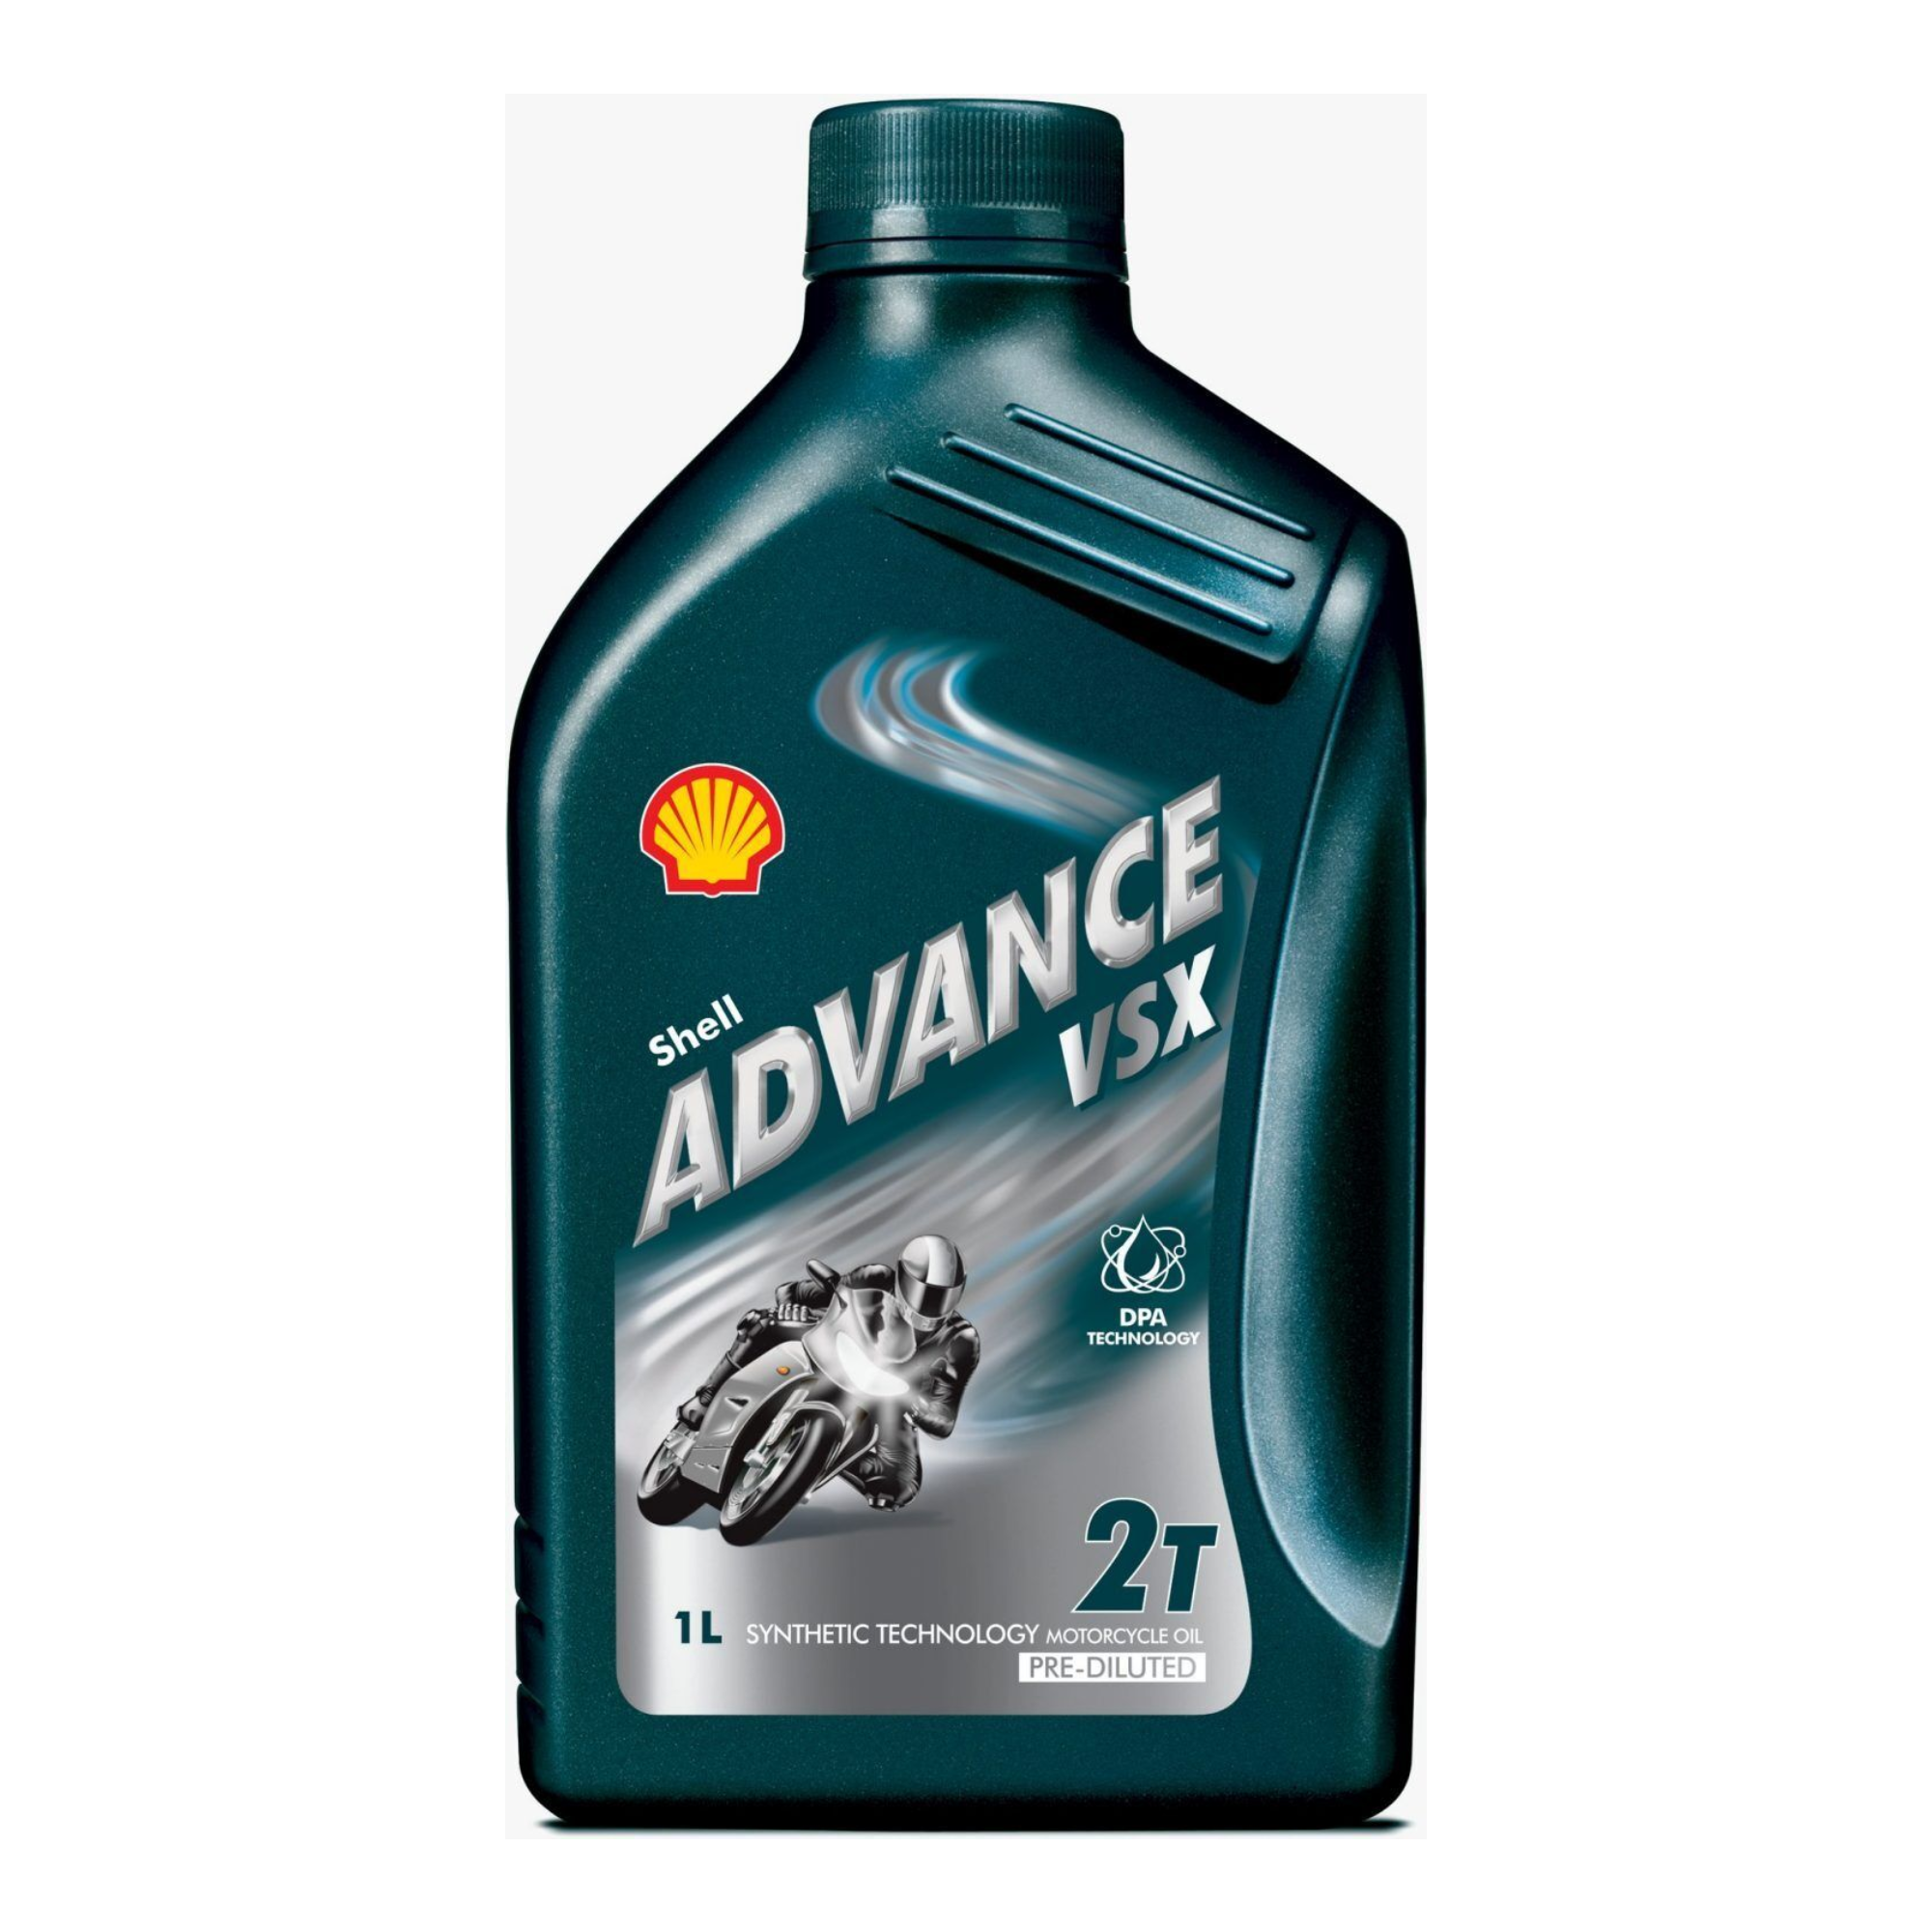 Shell Advance Vsx Motorcycle Oil 2 Fc/Egd 1Ltr